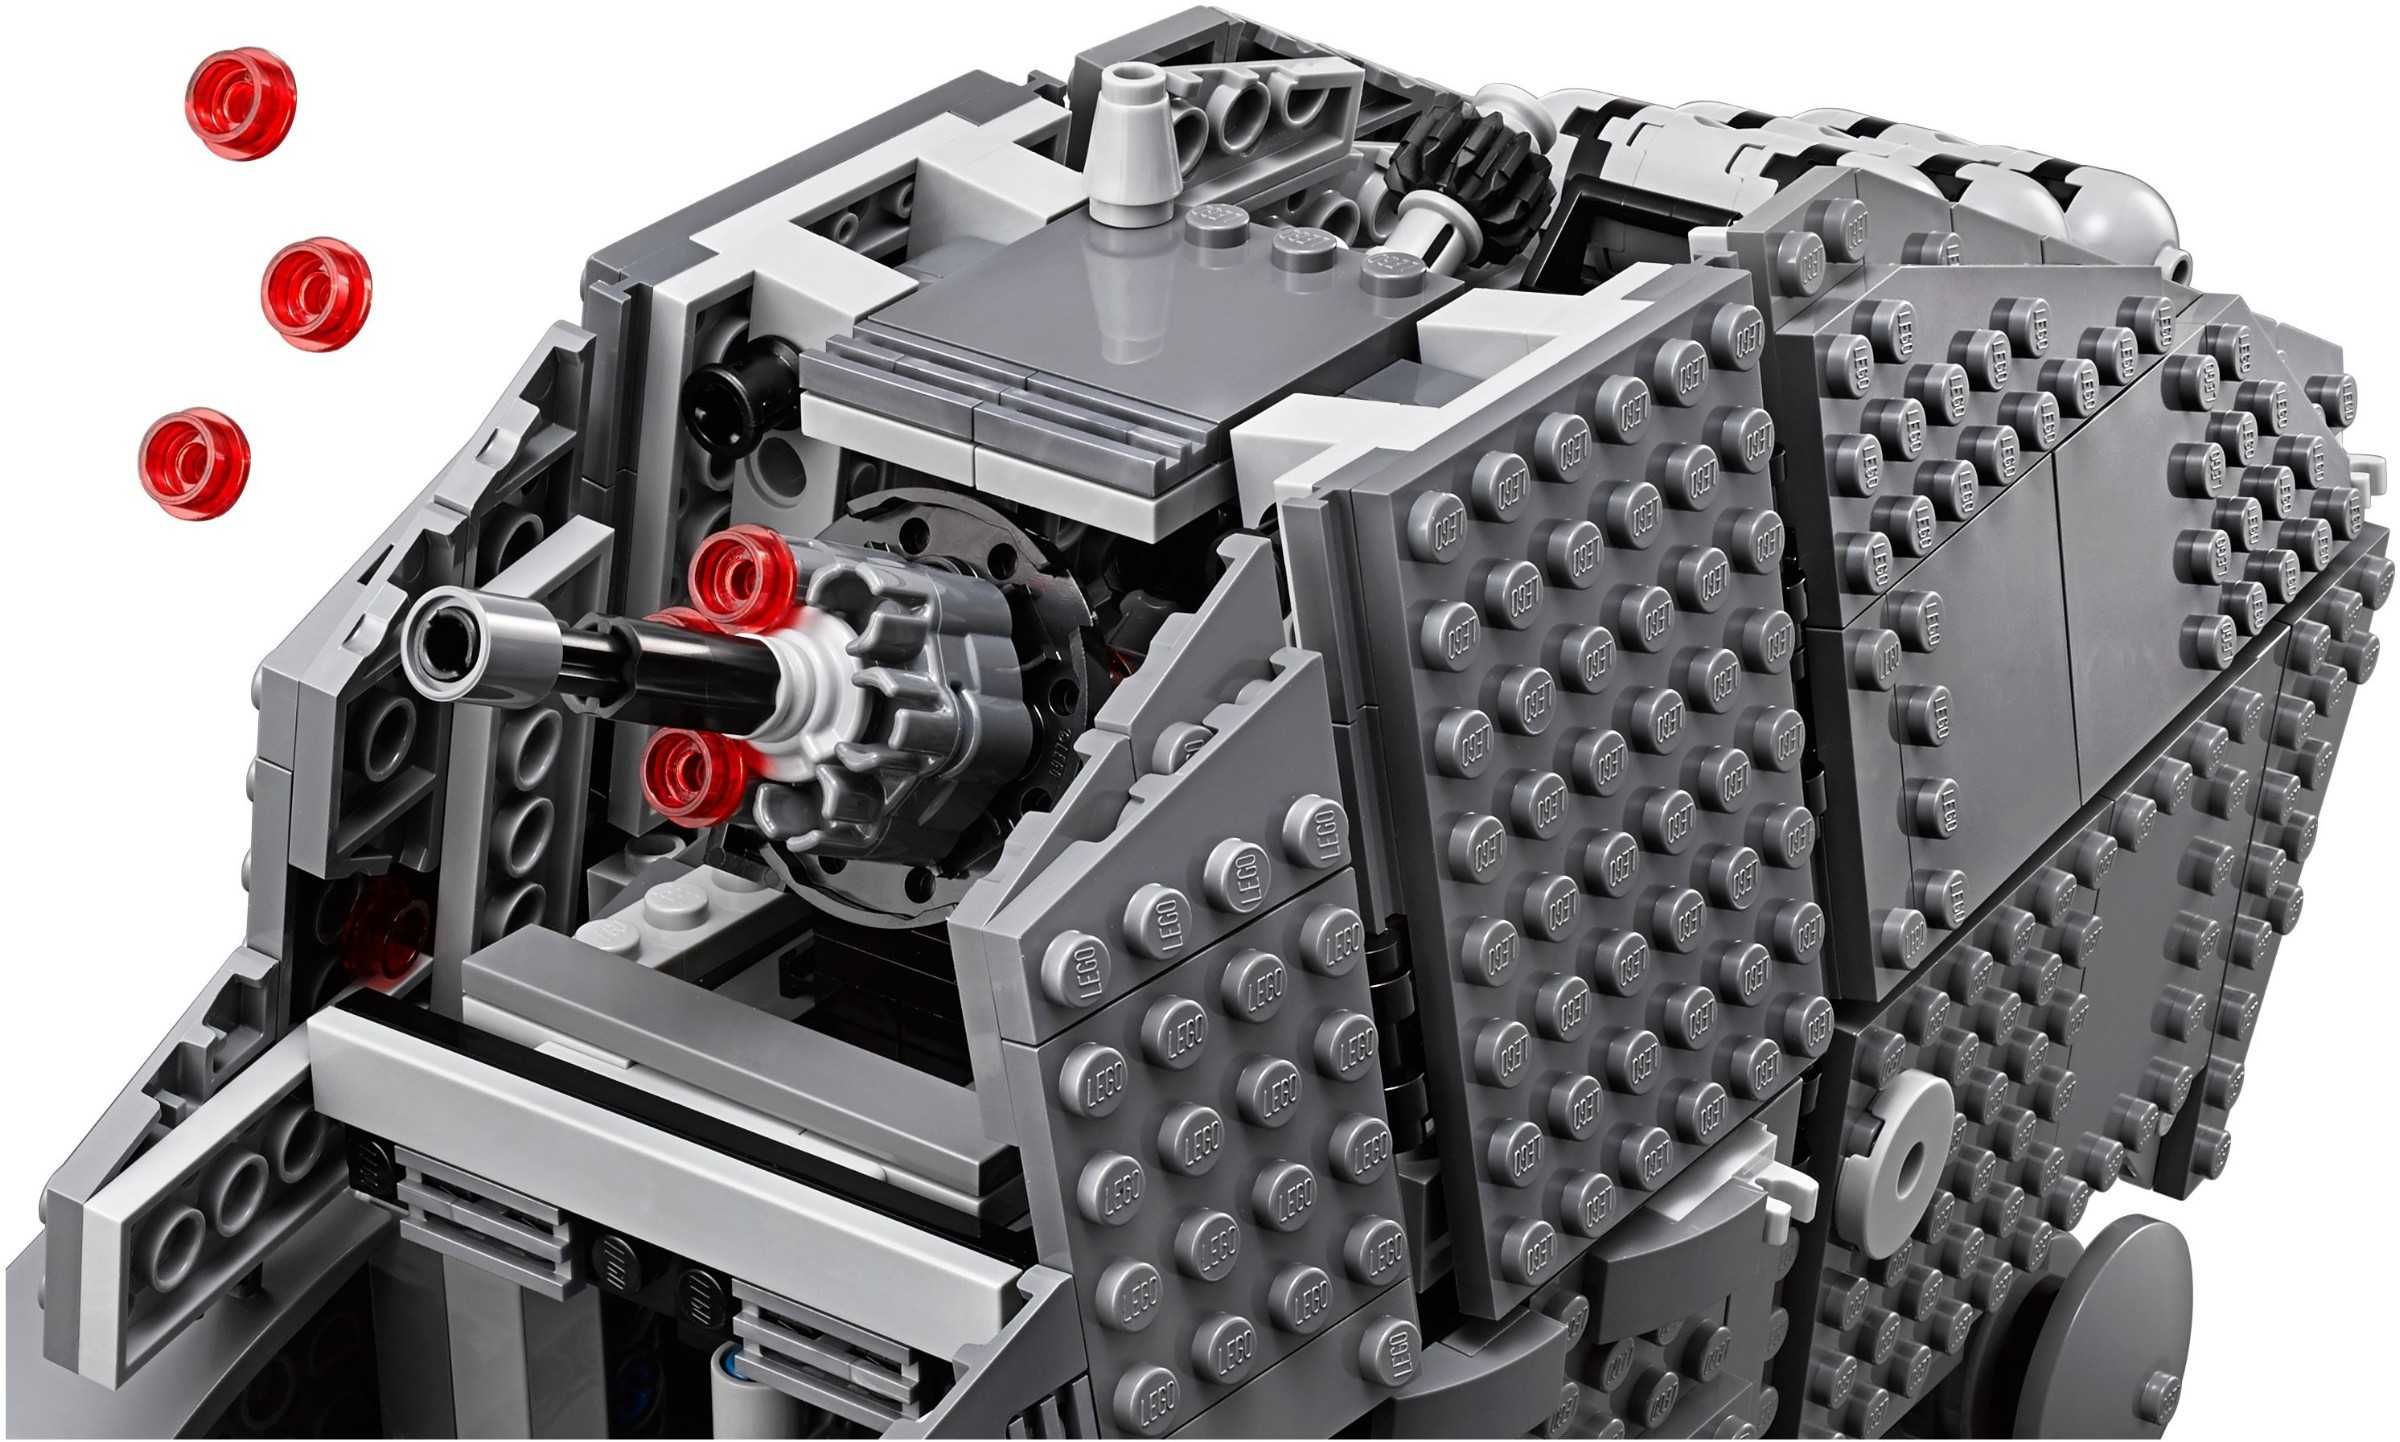 LEGO Star Wars 75189 - First Order Heavy Assault Walker- AT-AT